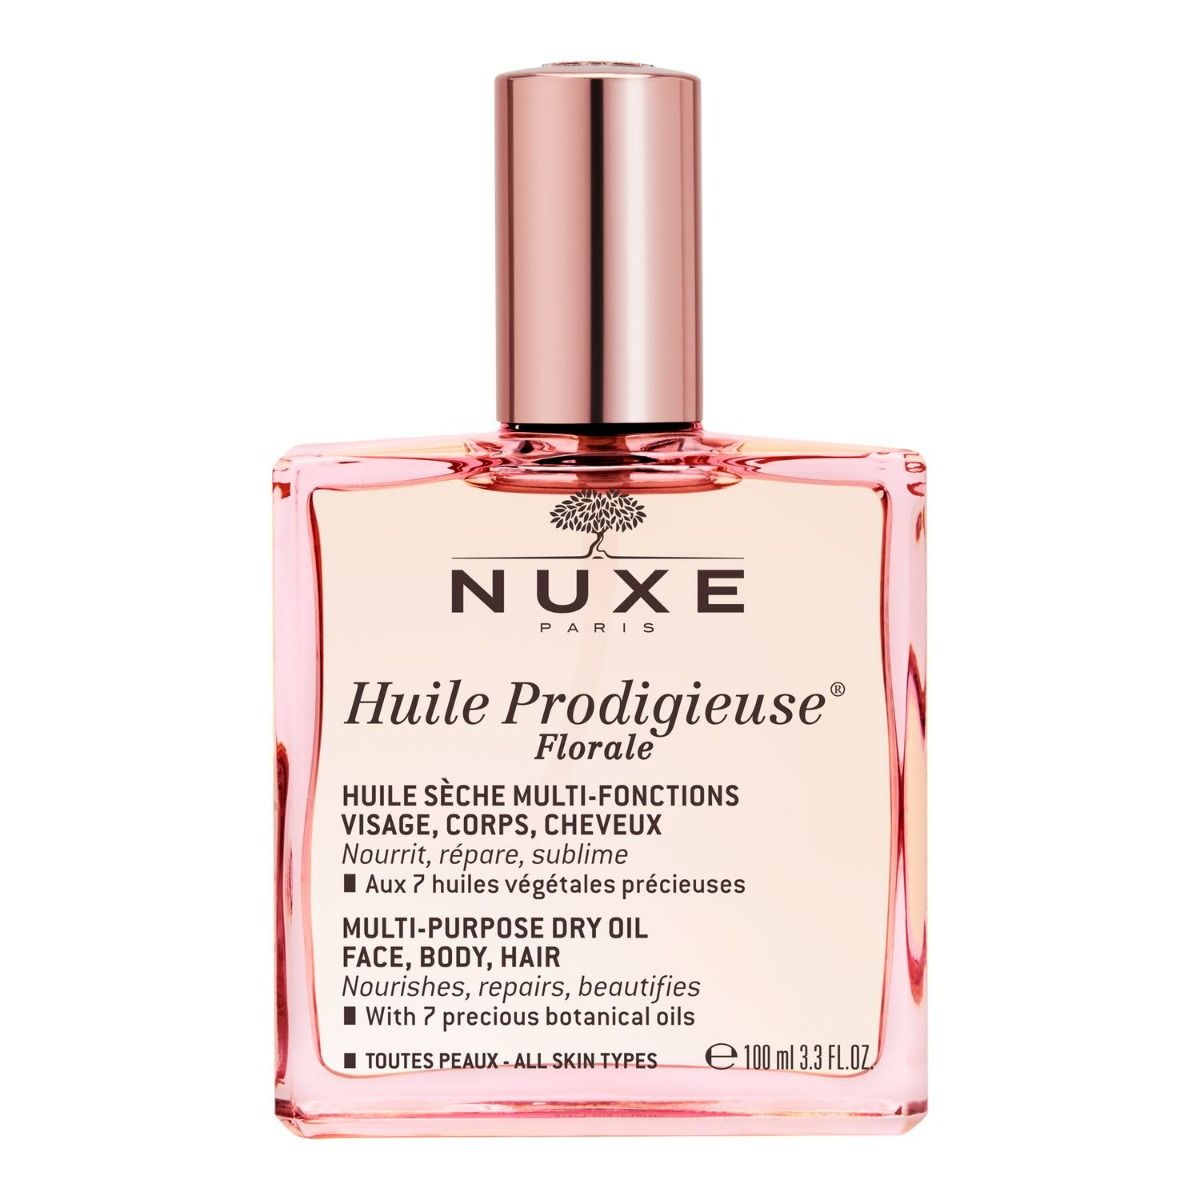 Nuxe Huile Prodigieuse Florale масло для лица, тела и волос, 100 ml nuxe цветочное сухое масло huile prodigieuse florale 50 мл nuxe prodigieuse